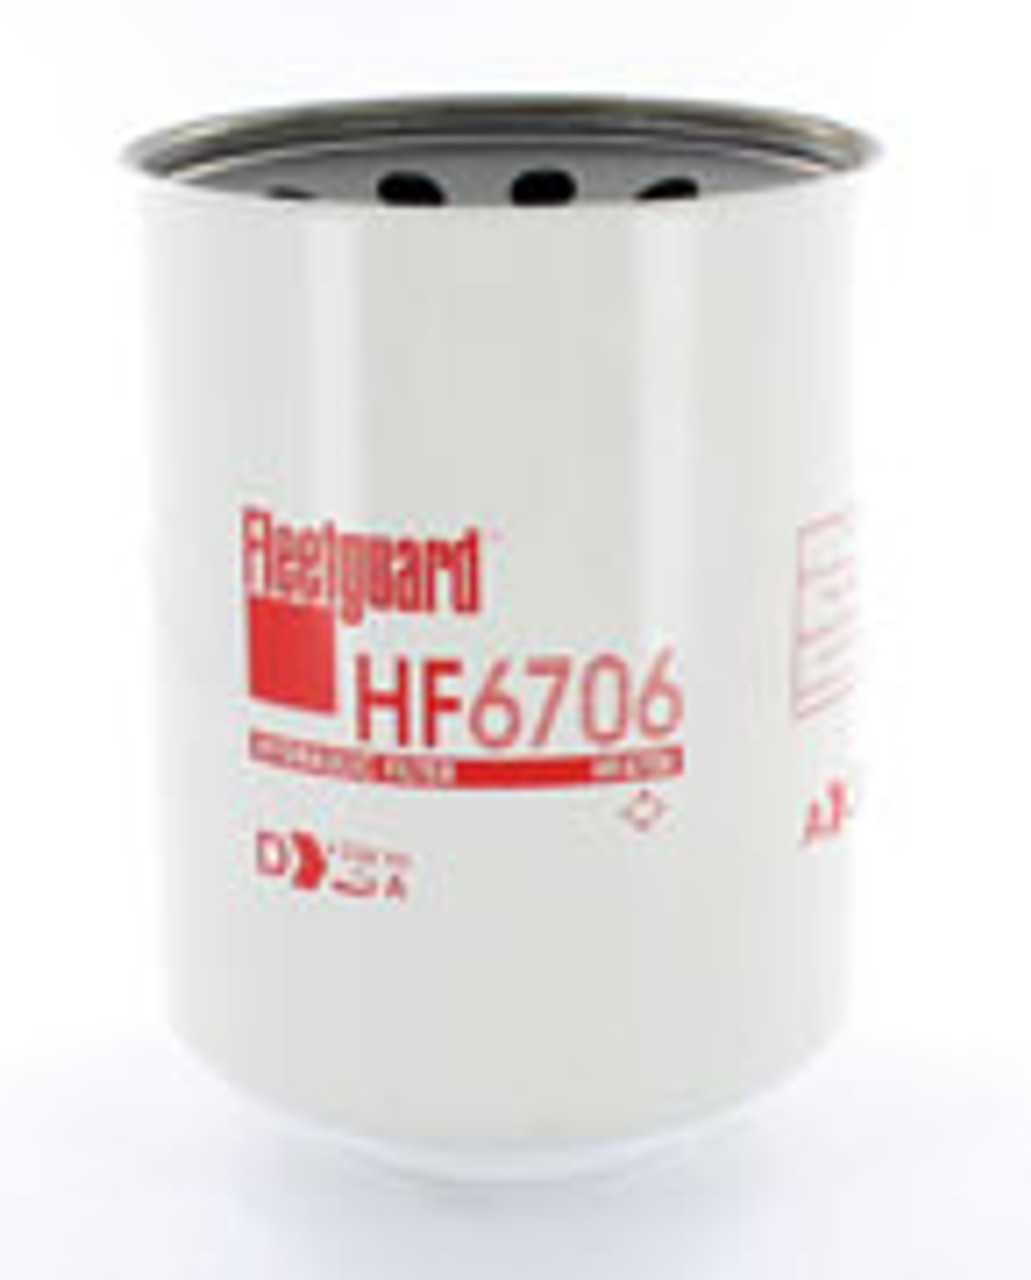 HF6706: Fleetguard Spin-On Hydraulic Filter